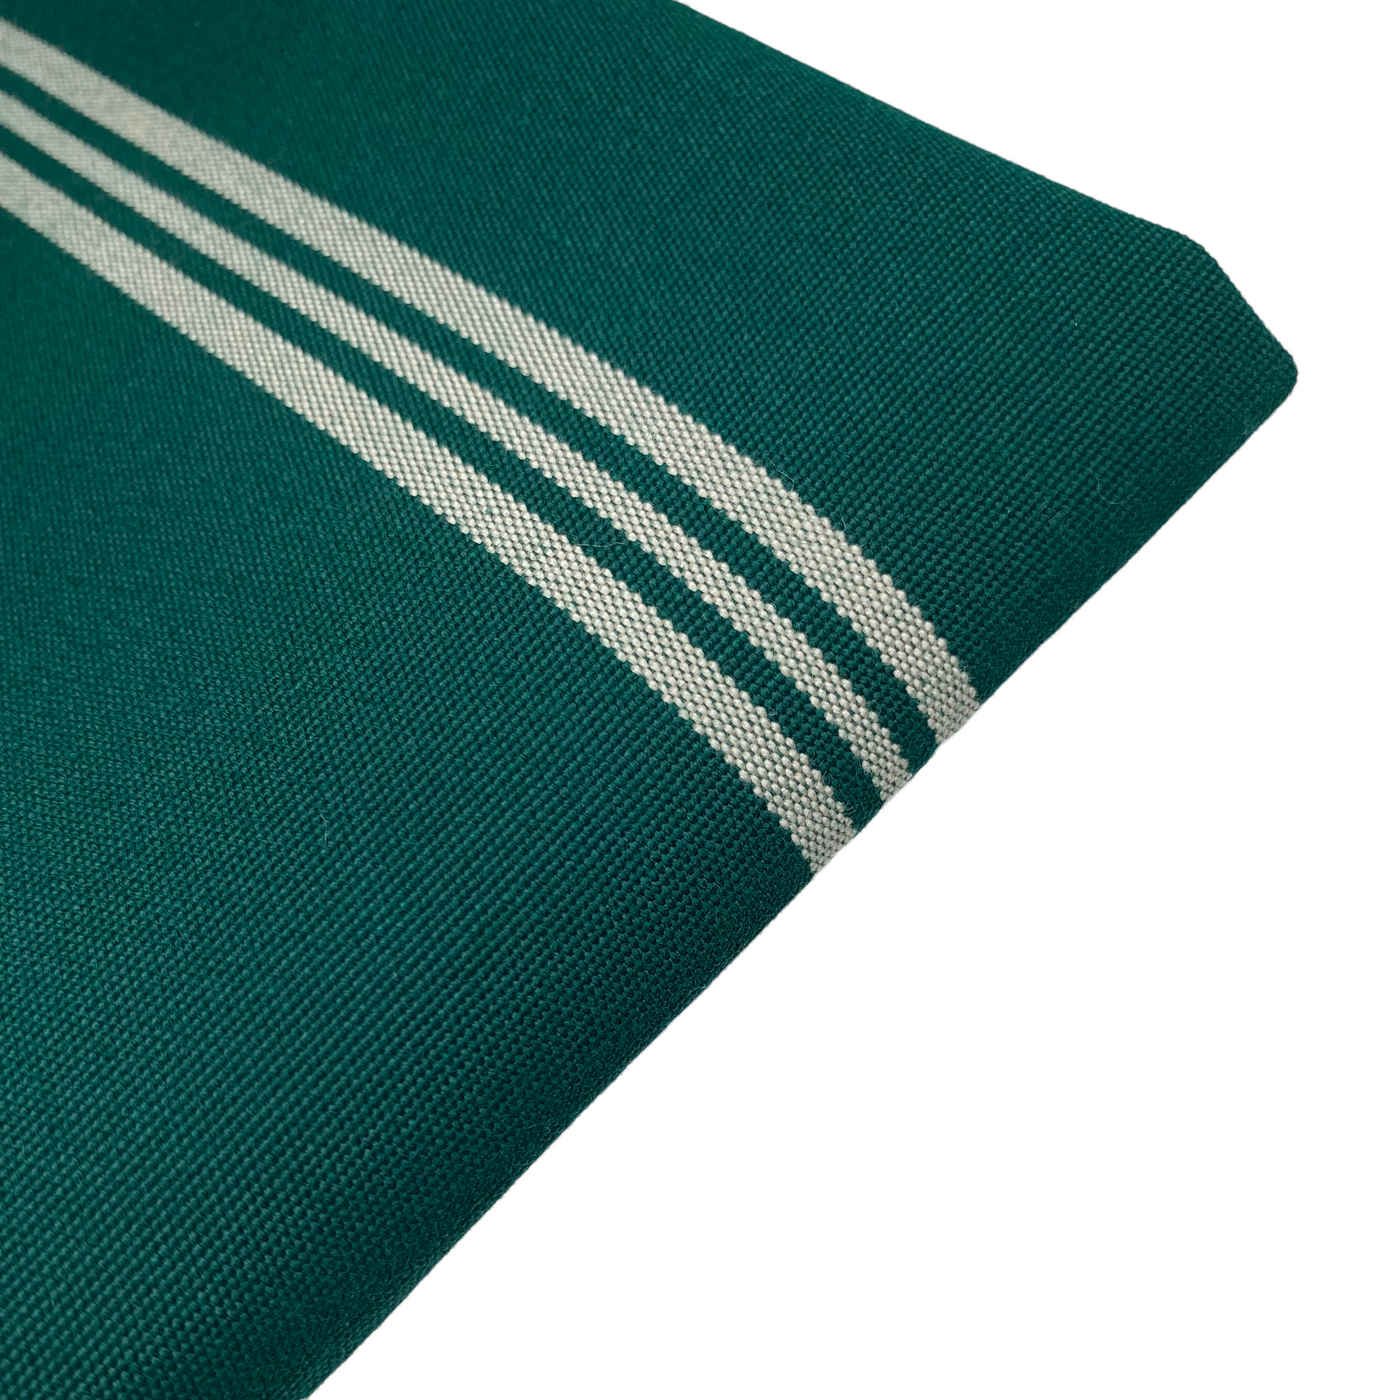 Sunbrella Striped Woven Upholstery - 48” - Burgundy/Beige